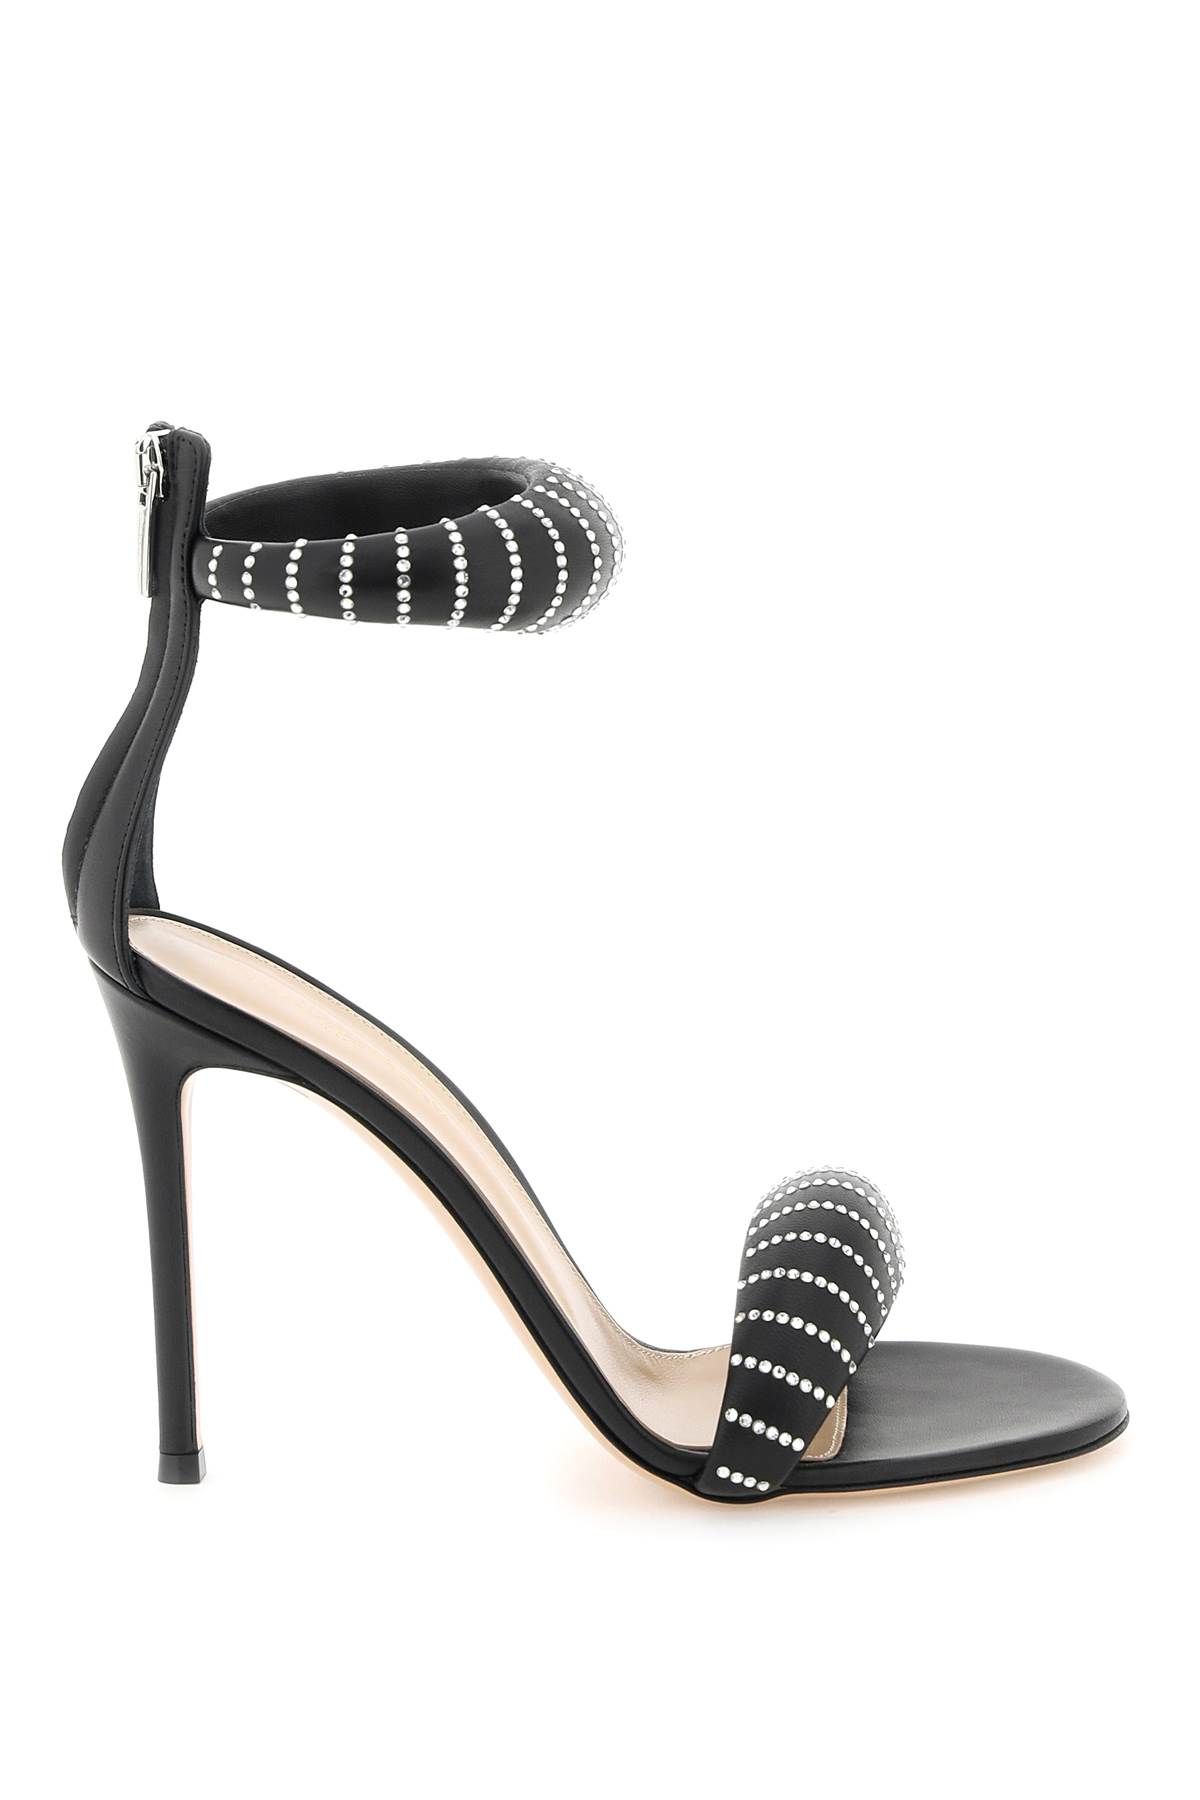 Gianvito Rossi Gianvito Rossi 'Bijoux Crystal' Sandals - Stylemyle | Stylemyle (US)